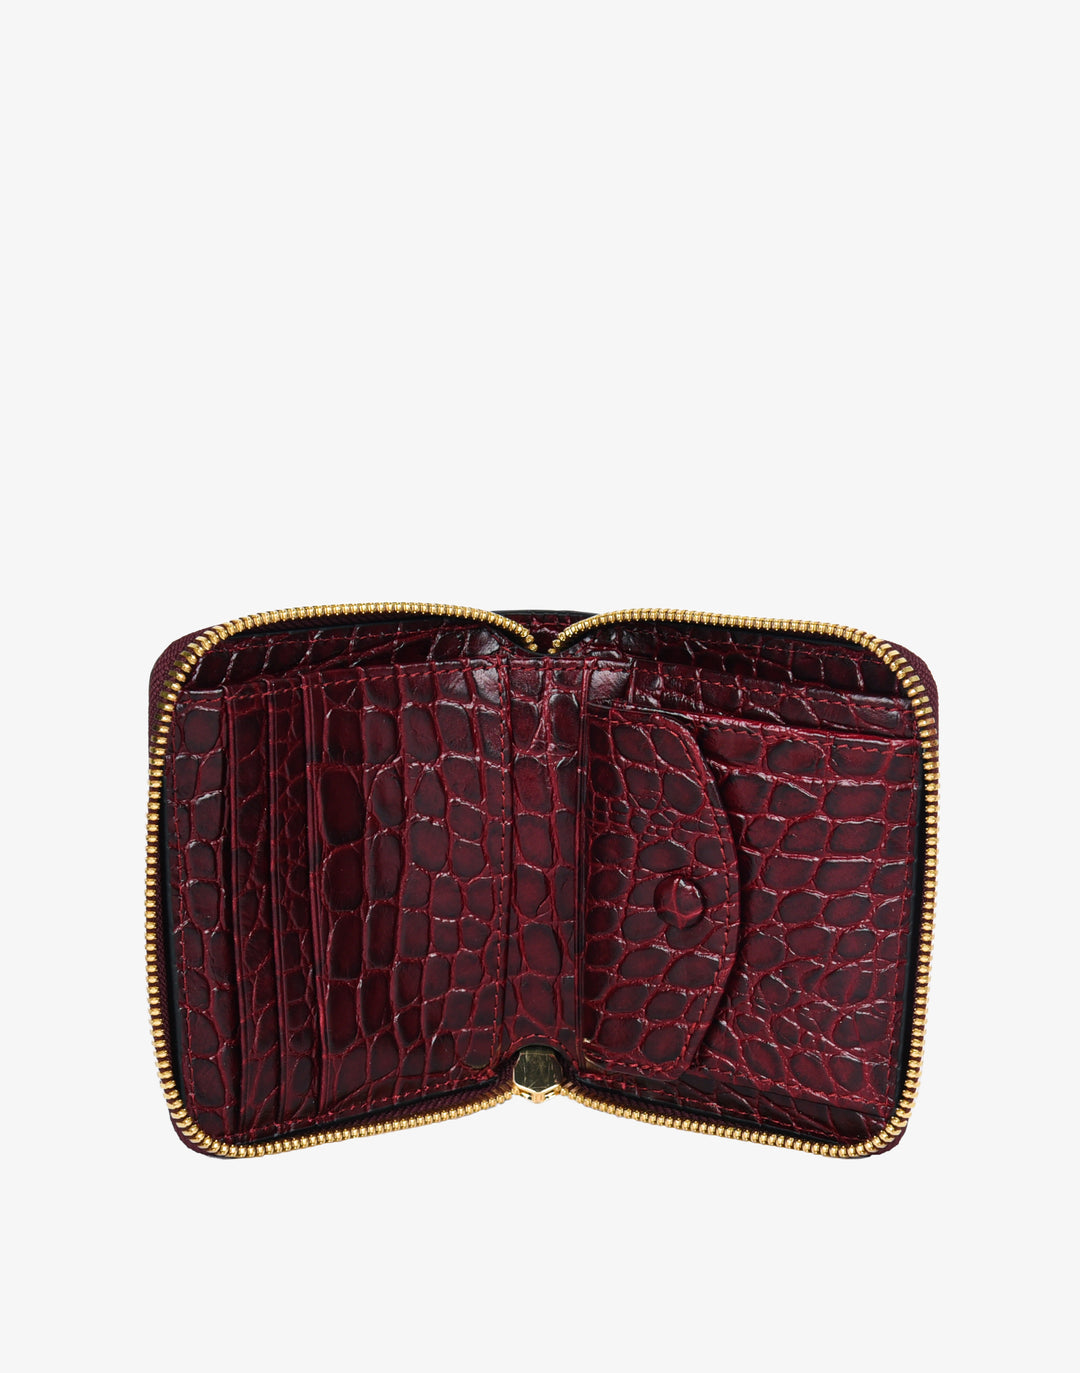 hyer goods recycled leather zip around wallet burgundy wine croco embossed#color_burgundy-croco